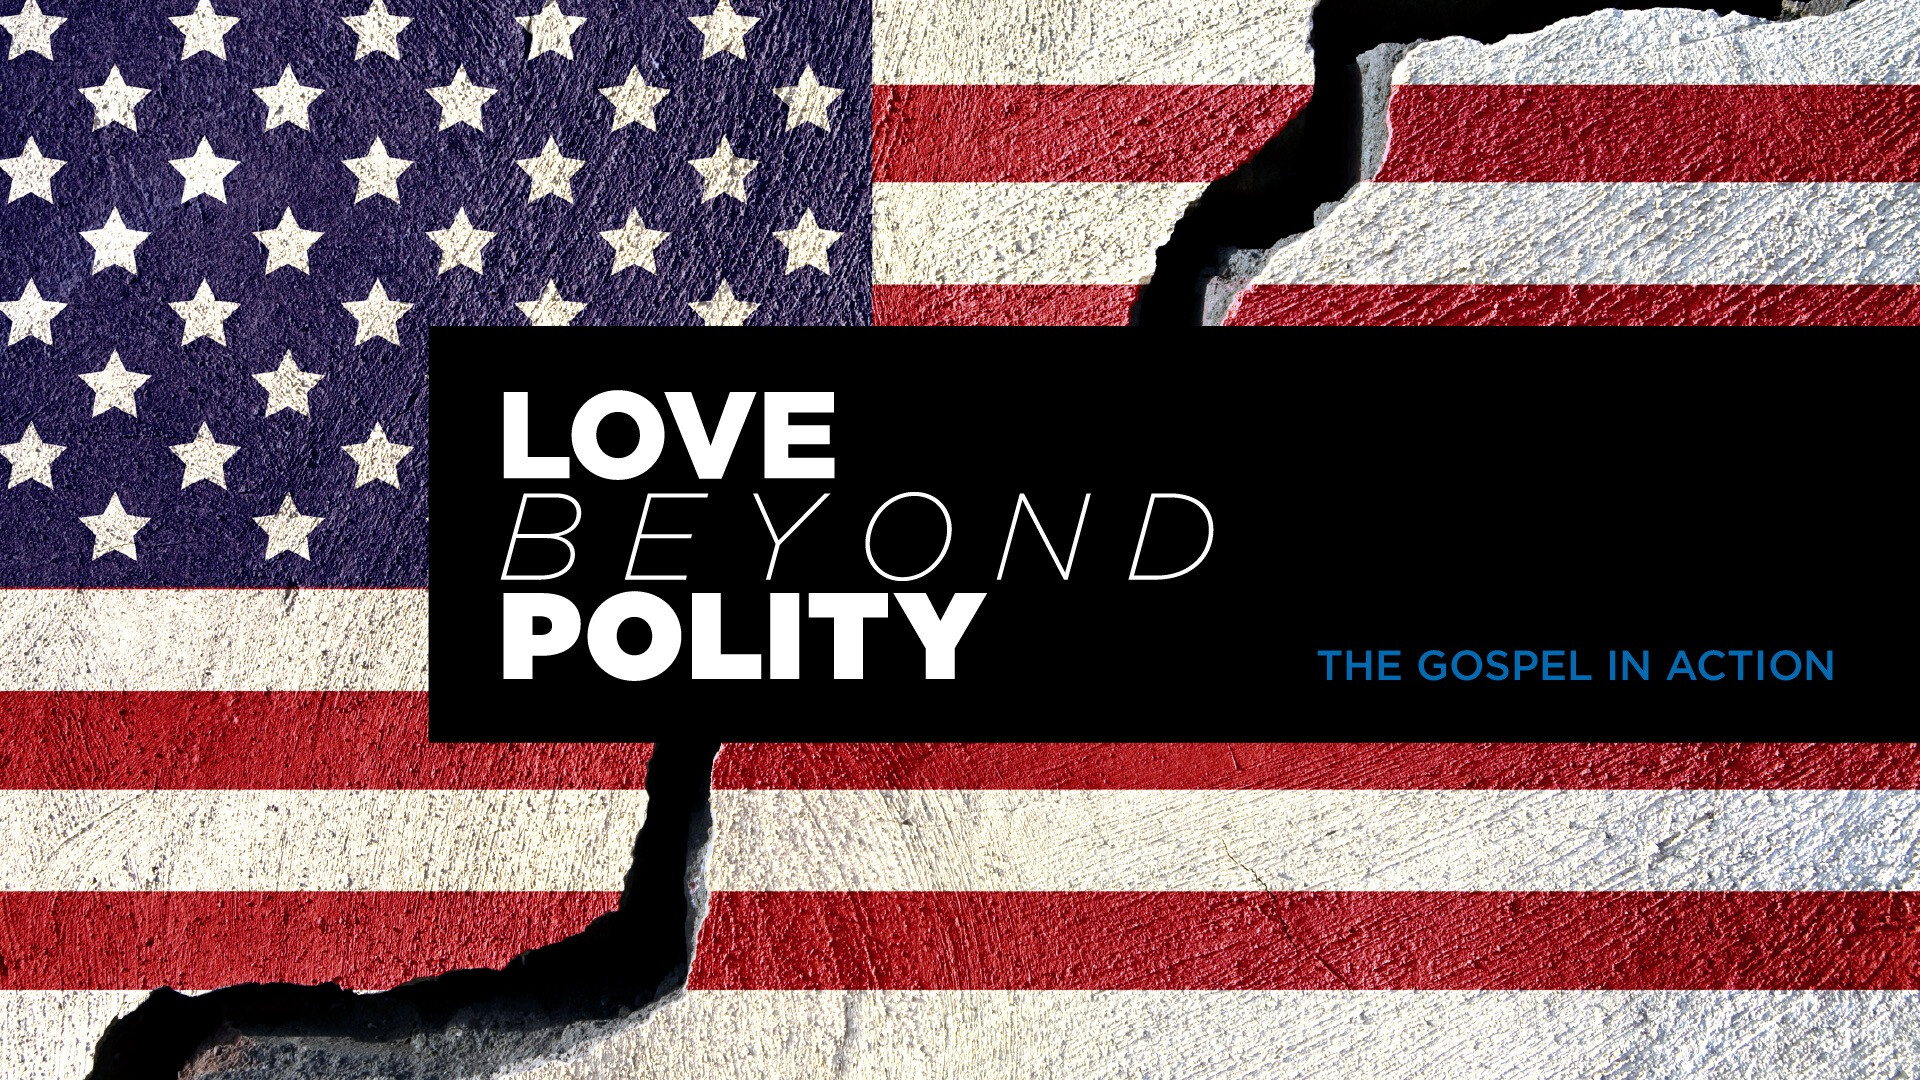 How to love beyond politics